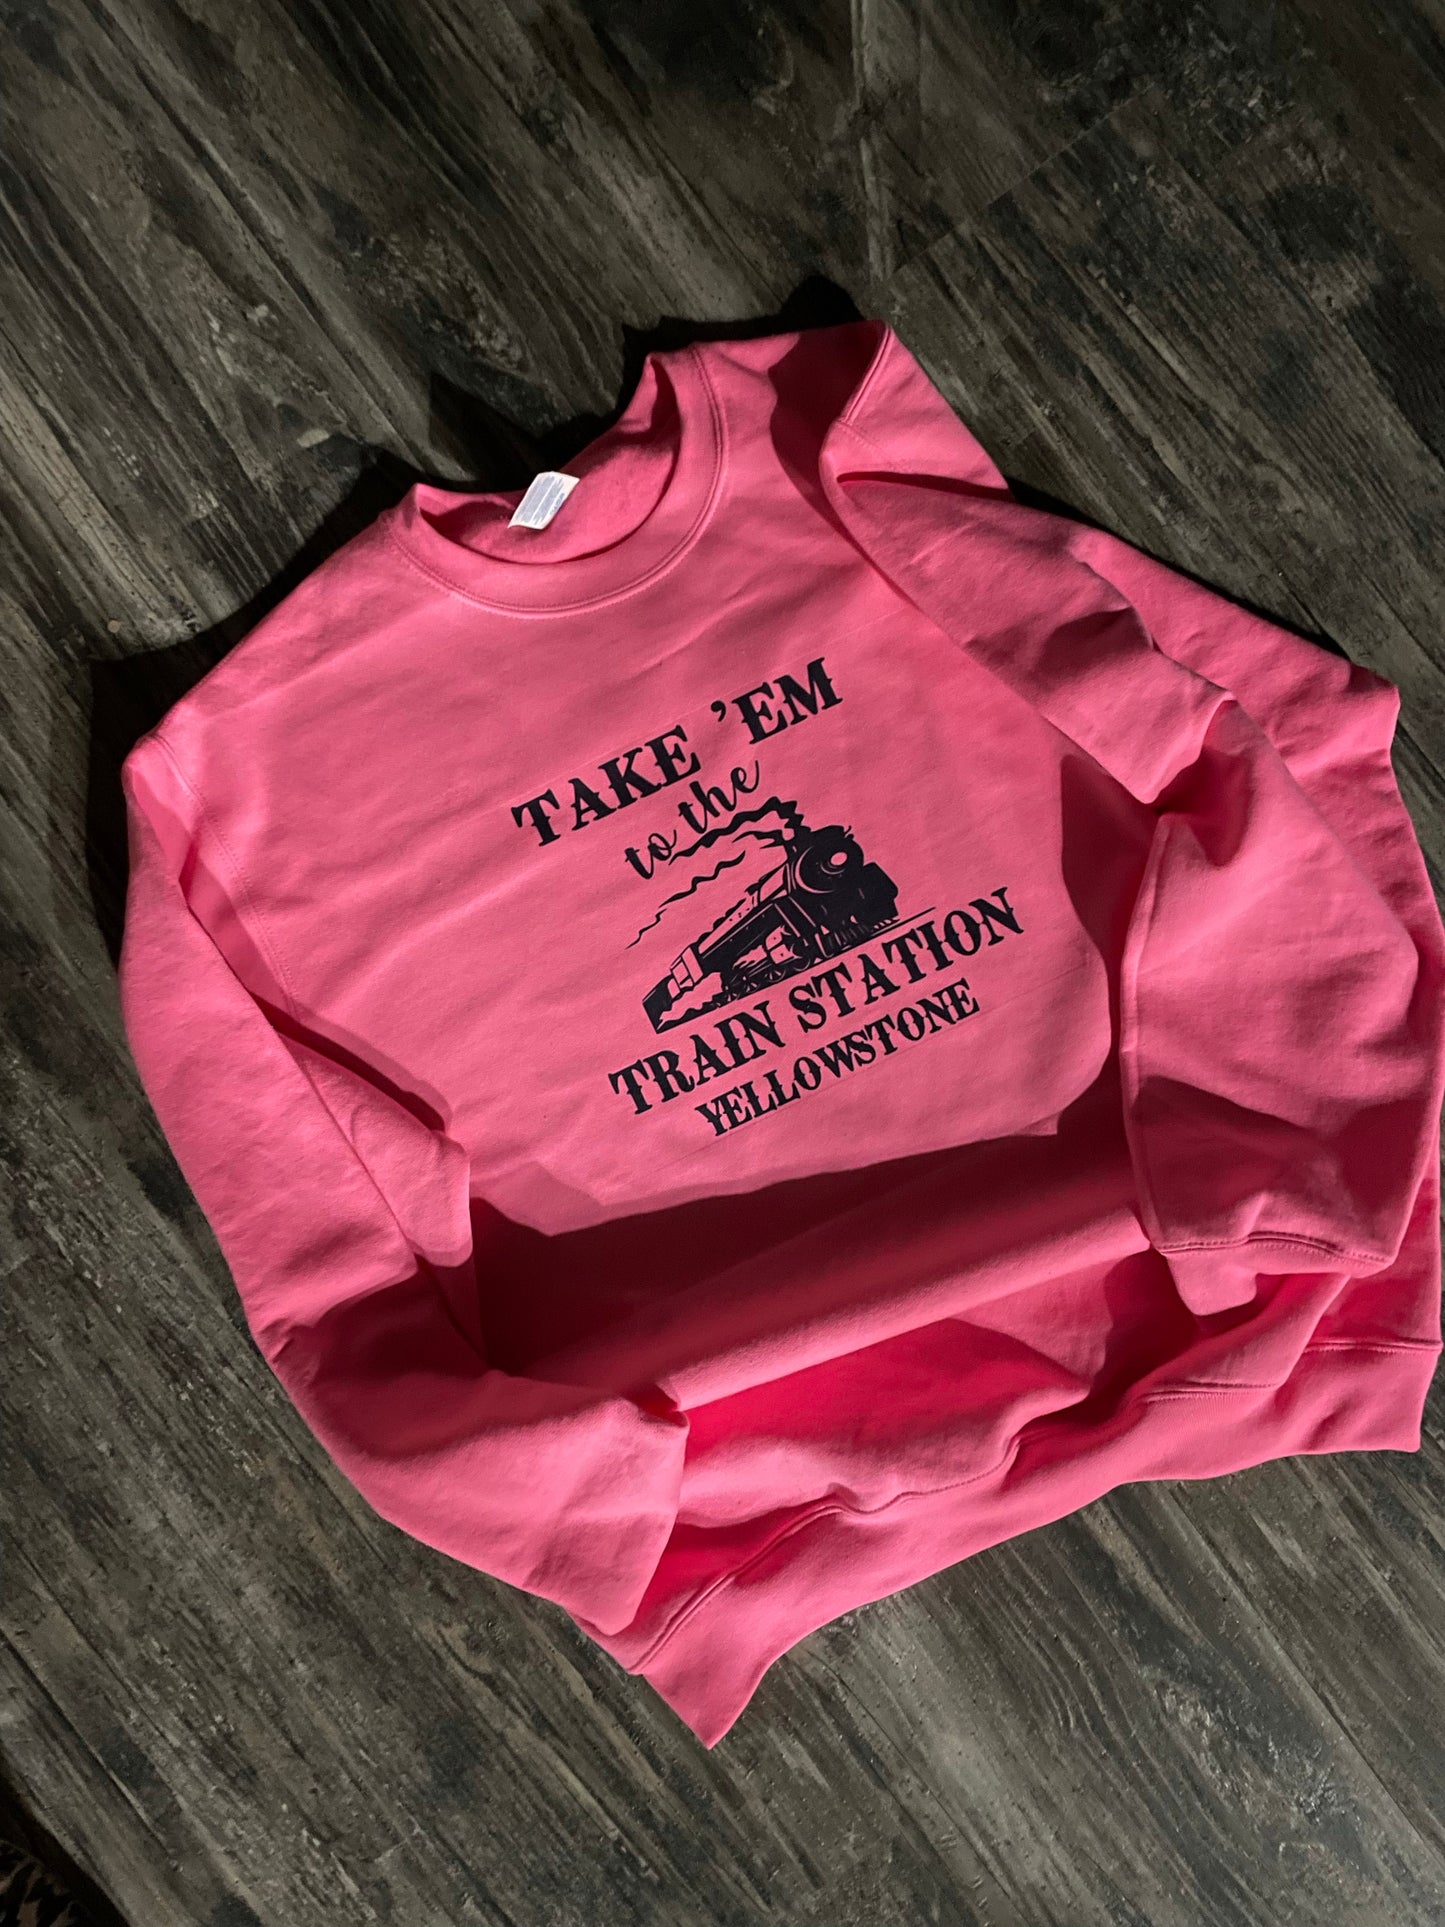 Take ‘Em to the Train Station Yellowstone Teeshirt